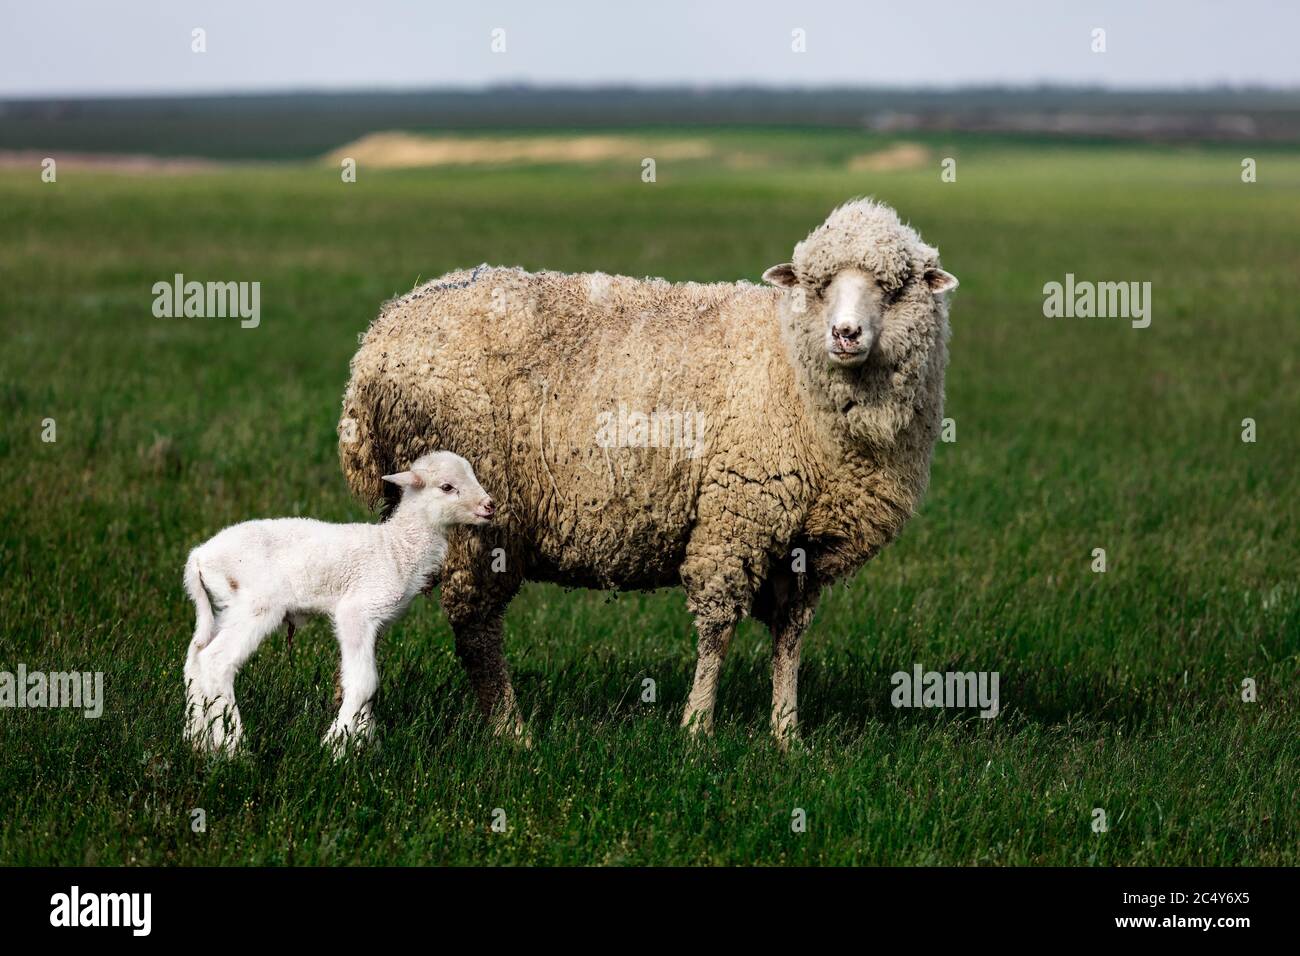 Sheep And Newborn Lamb Birth Of A New Life Stock Photo Alamy